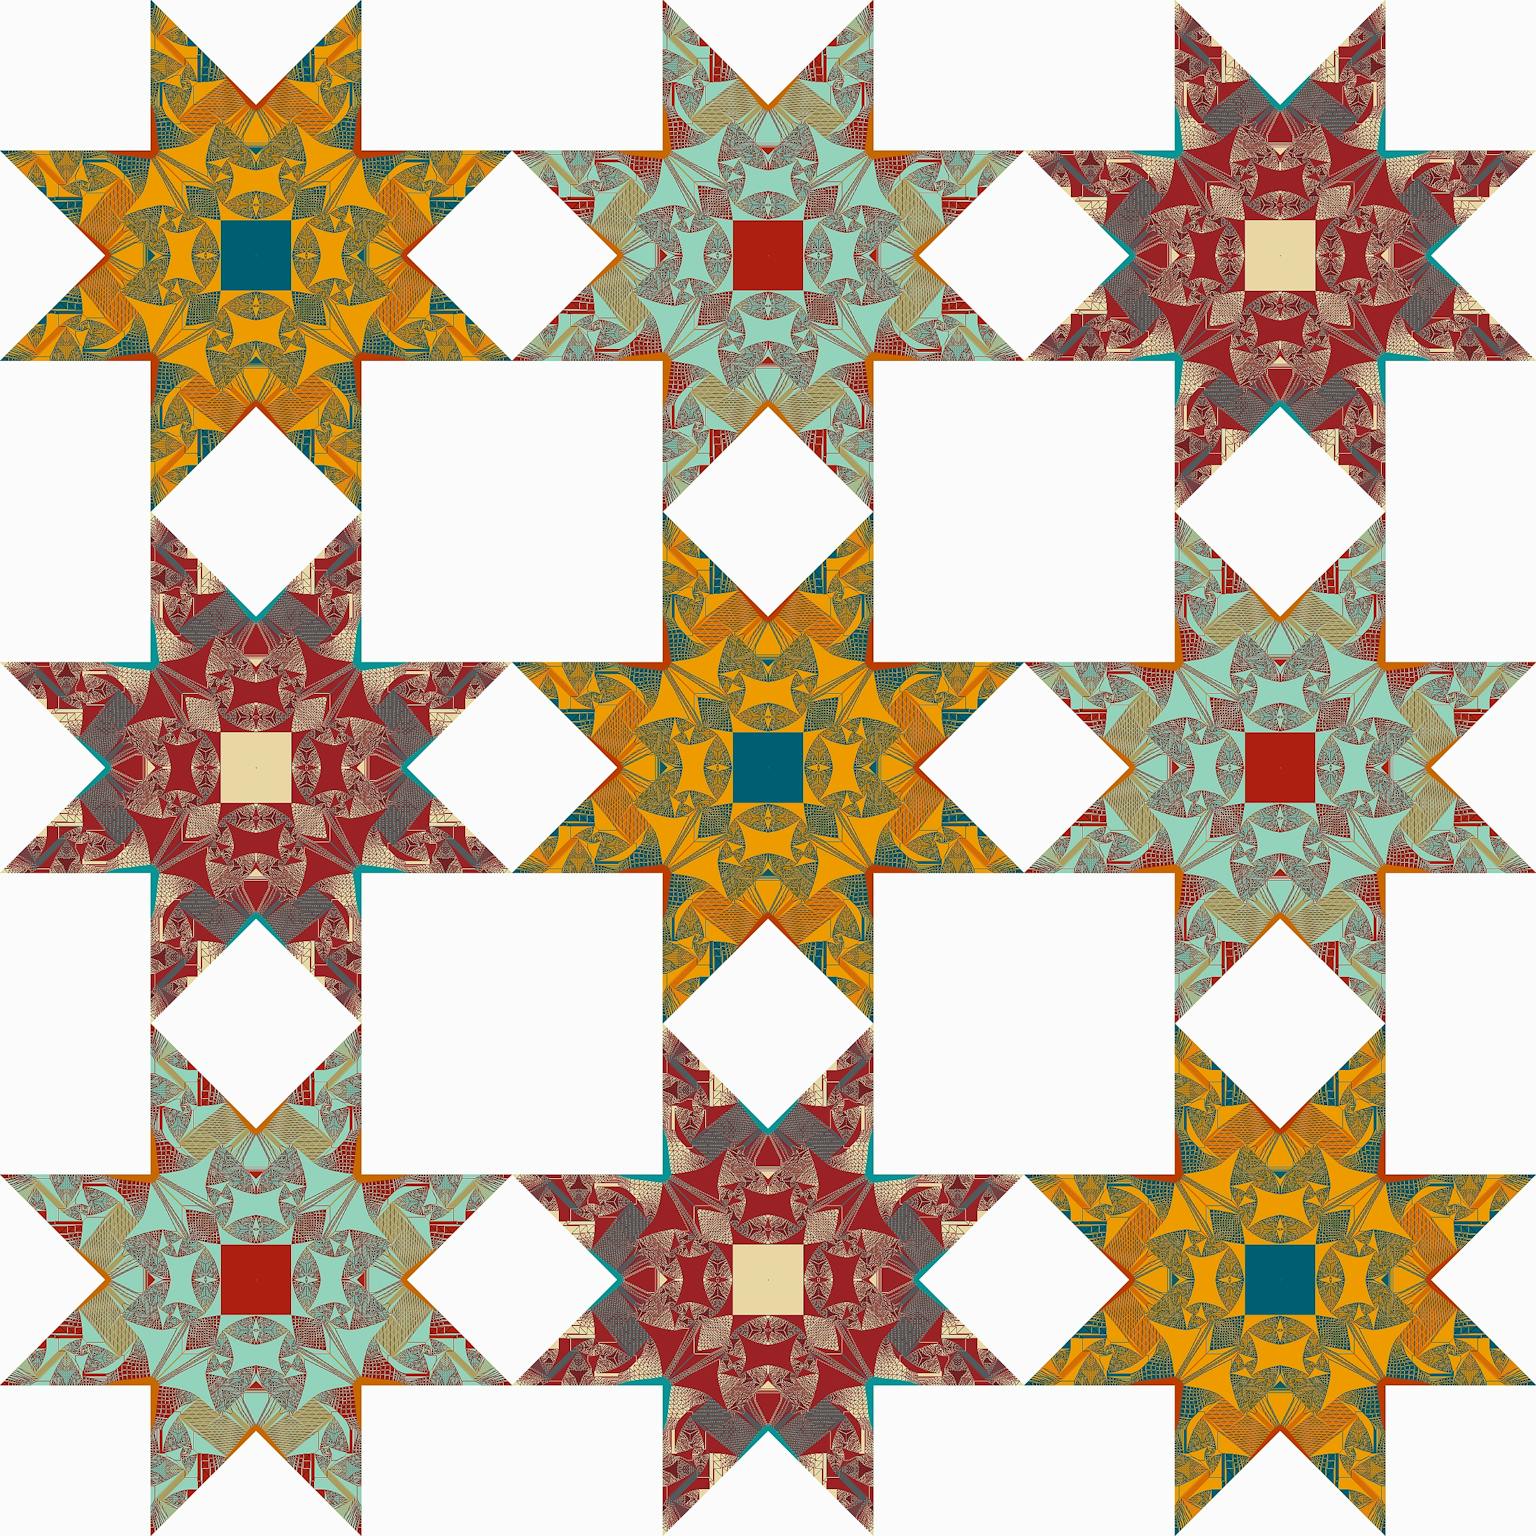 Image for entry 'Virginia Star Abelian Sandpile Quilt'